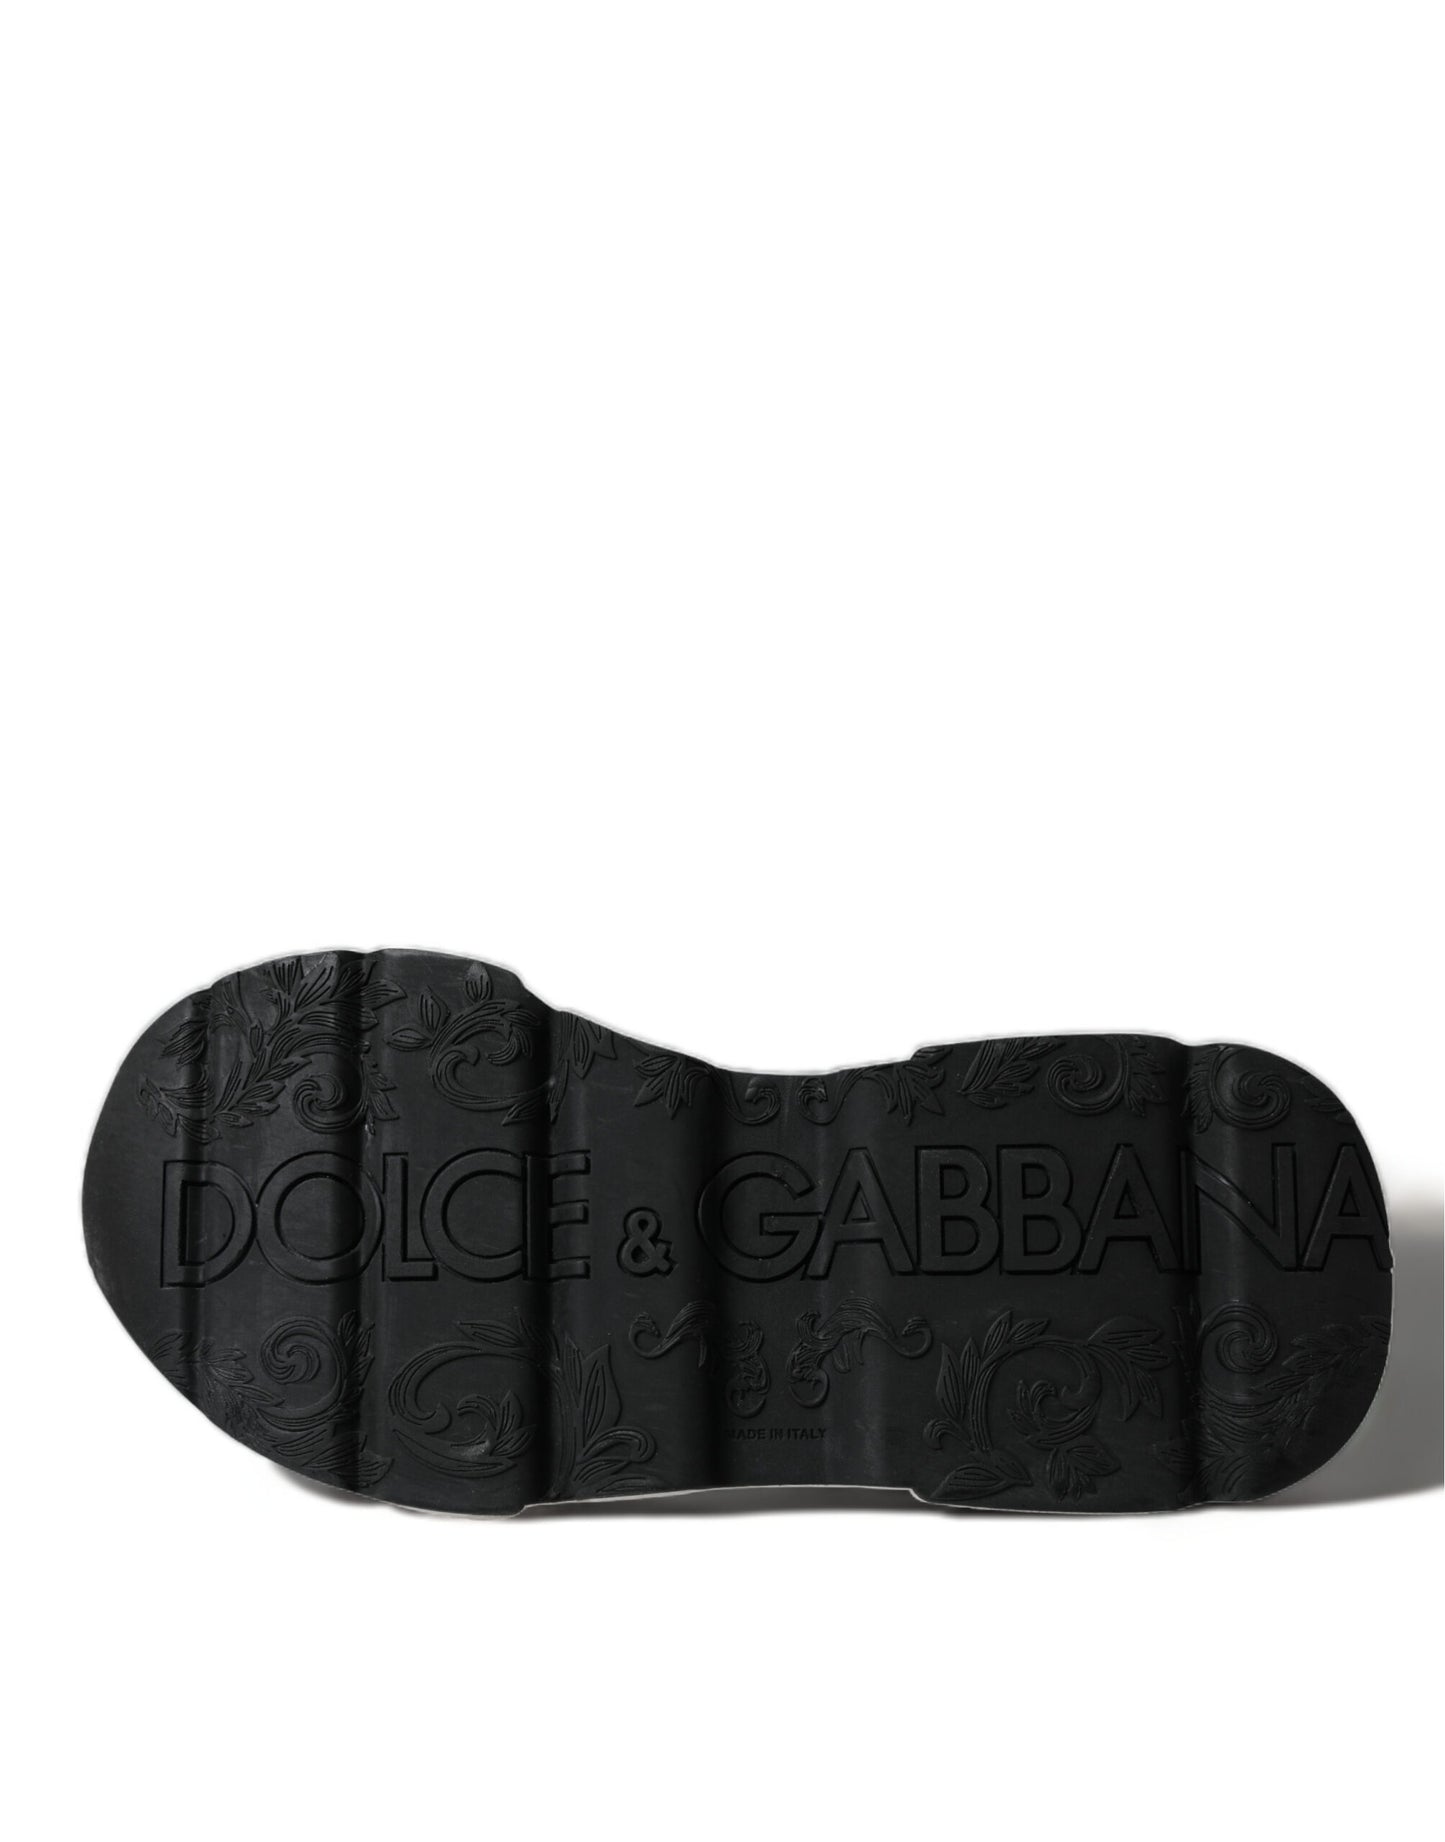 Dolce & Gabbana White Black Low Top Daymaster Sneakers Shoes - DEA STILOSA MILANO